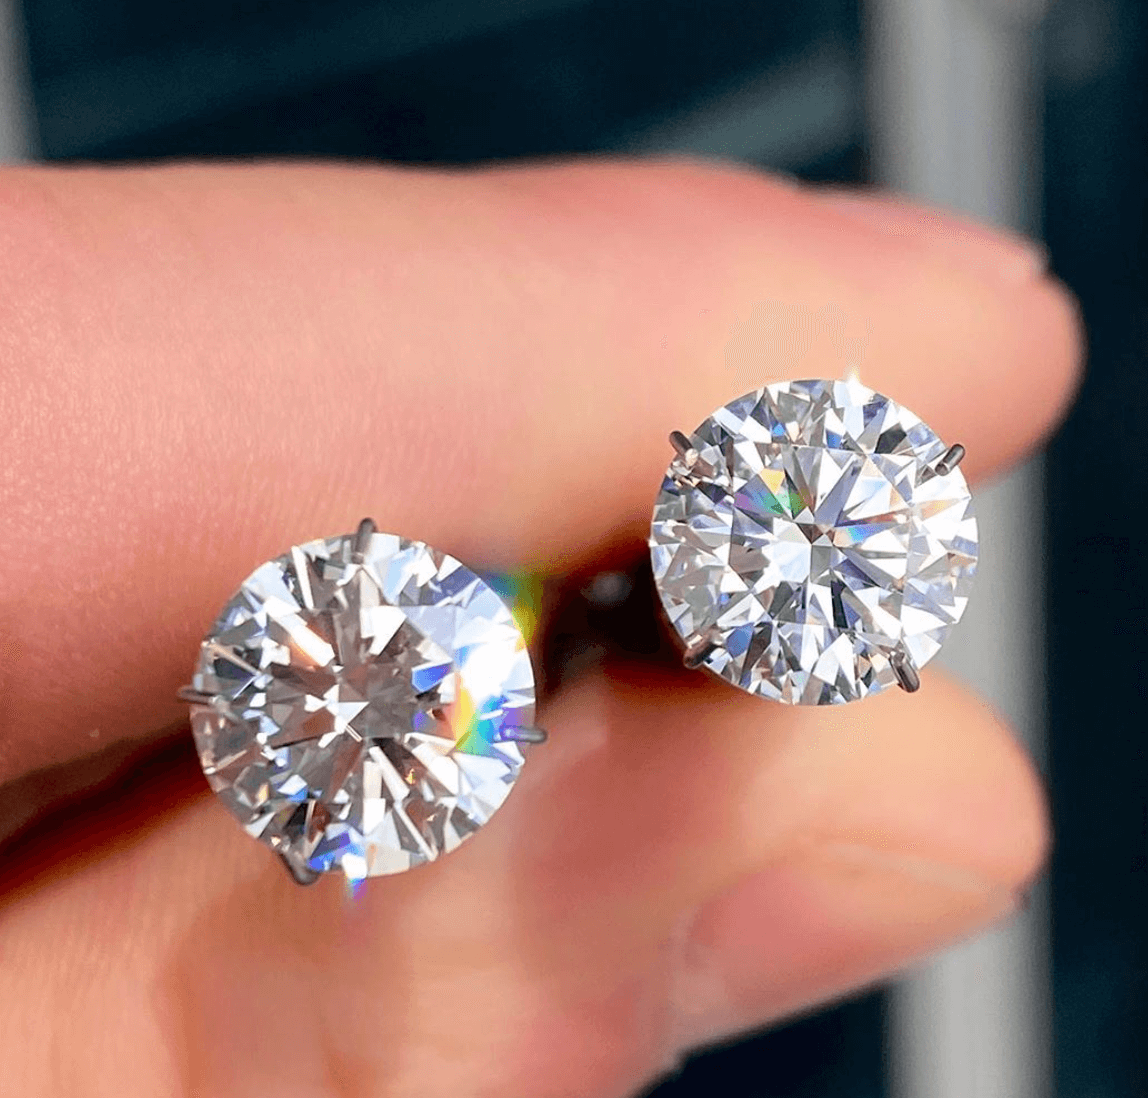 Moissanite or Diamond?